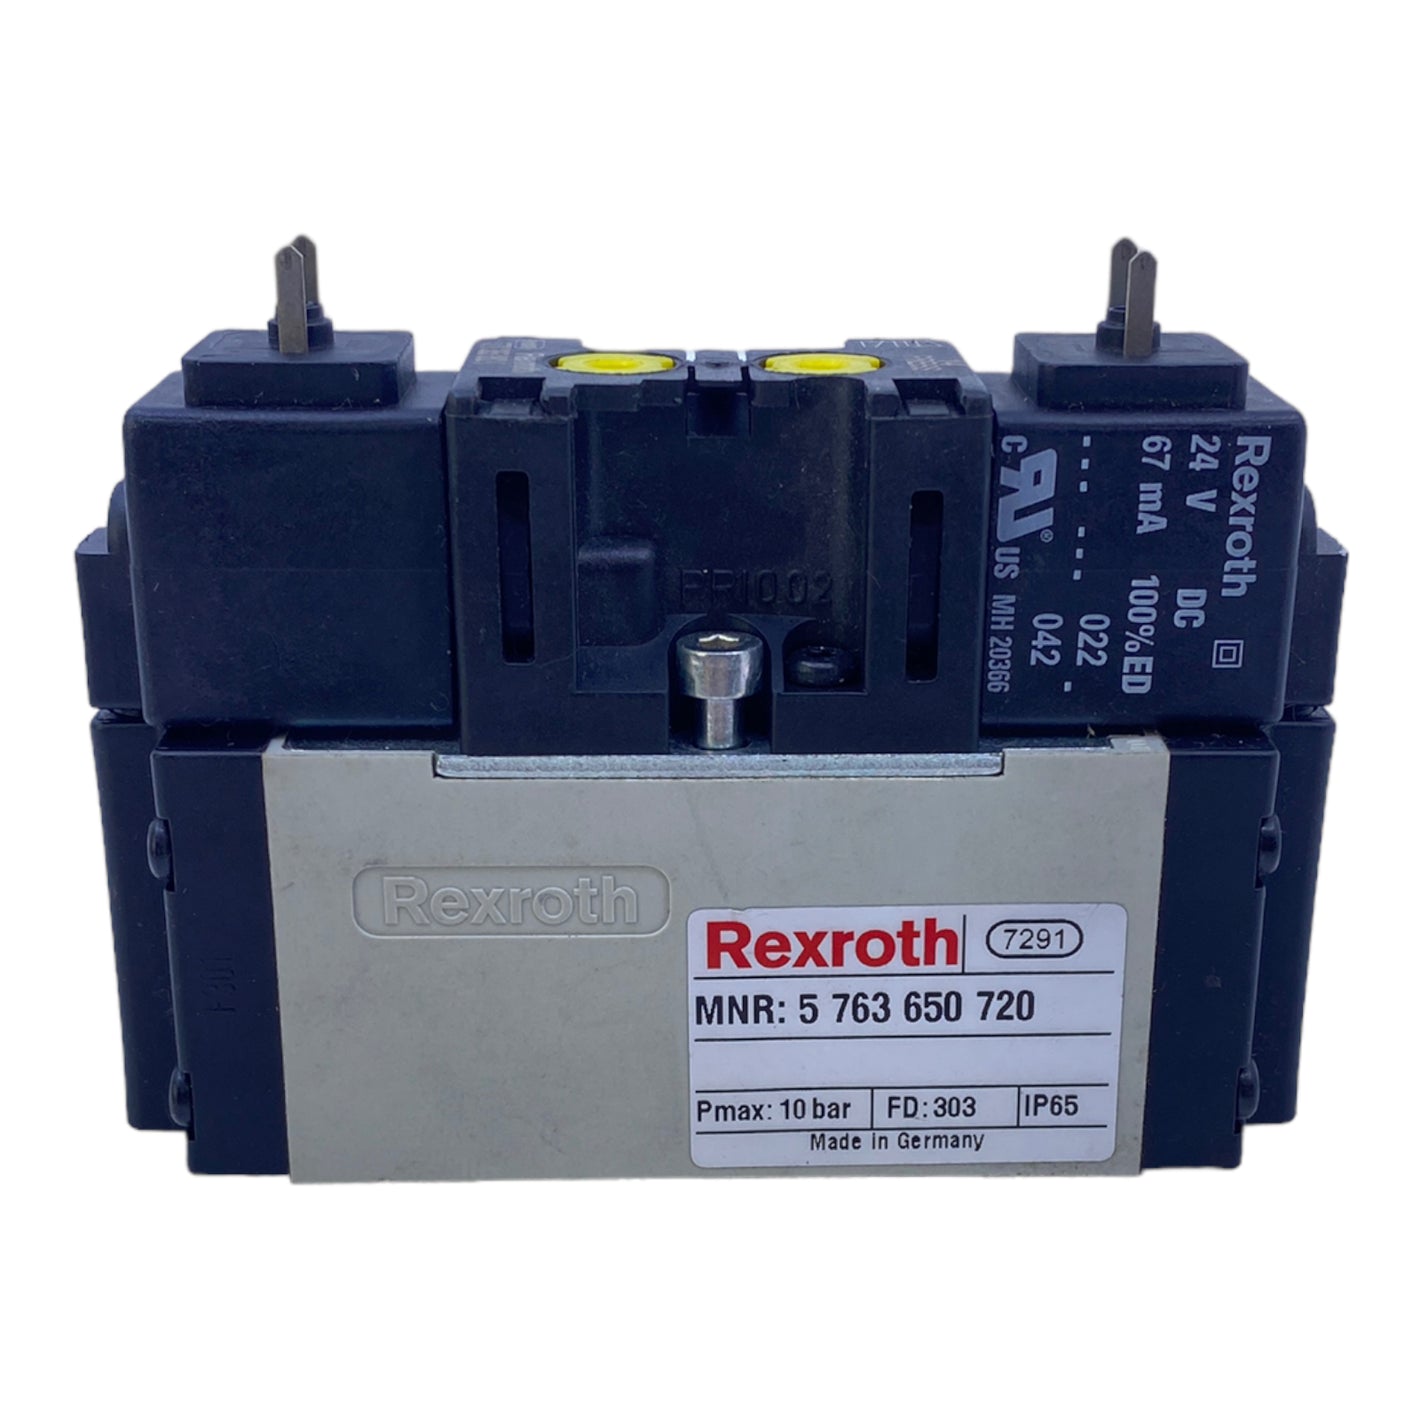 Rexroth 5763650720 solenoid valve 24V DC 67mA 10 bar 